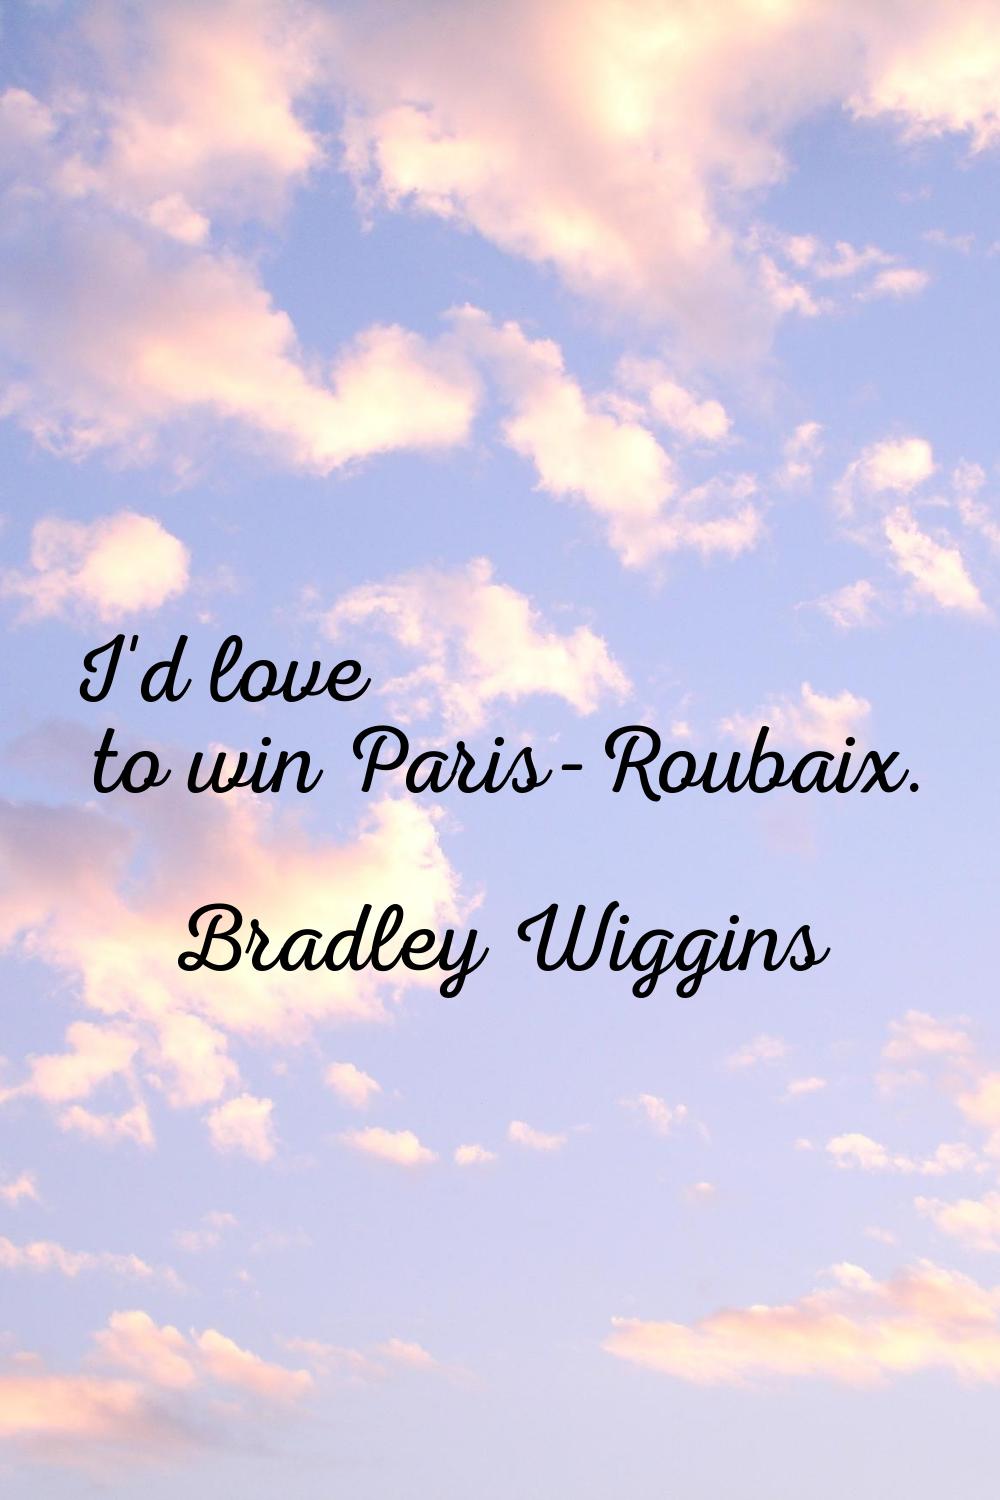 I'd love to win Paris-Roubaix.